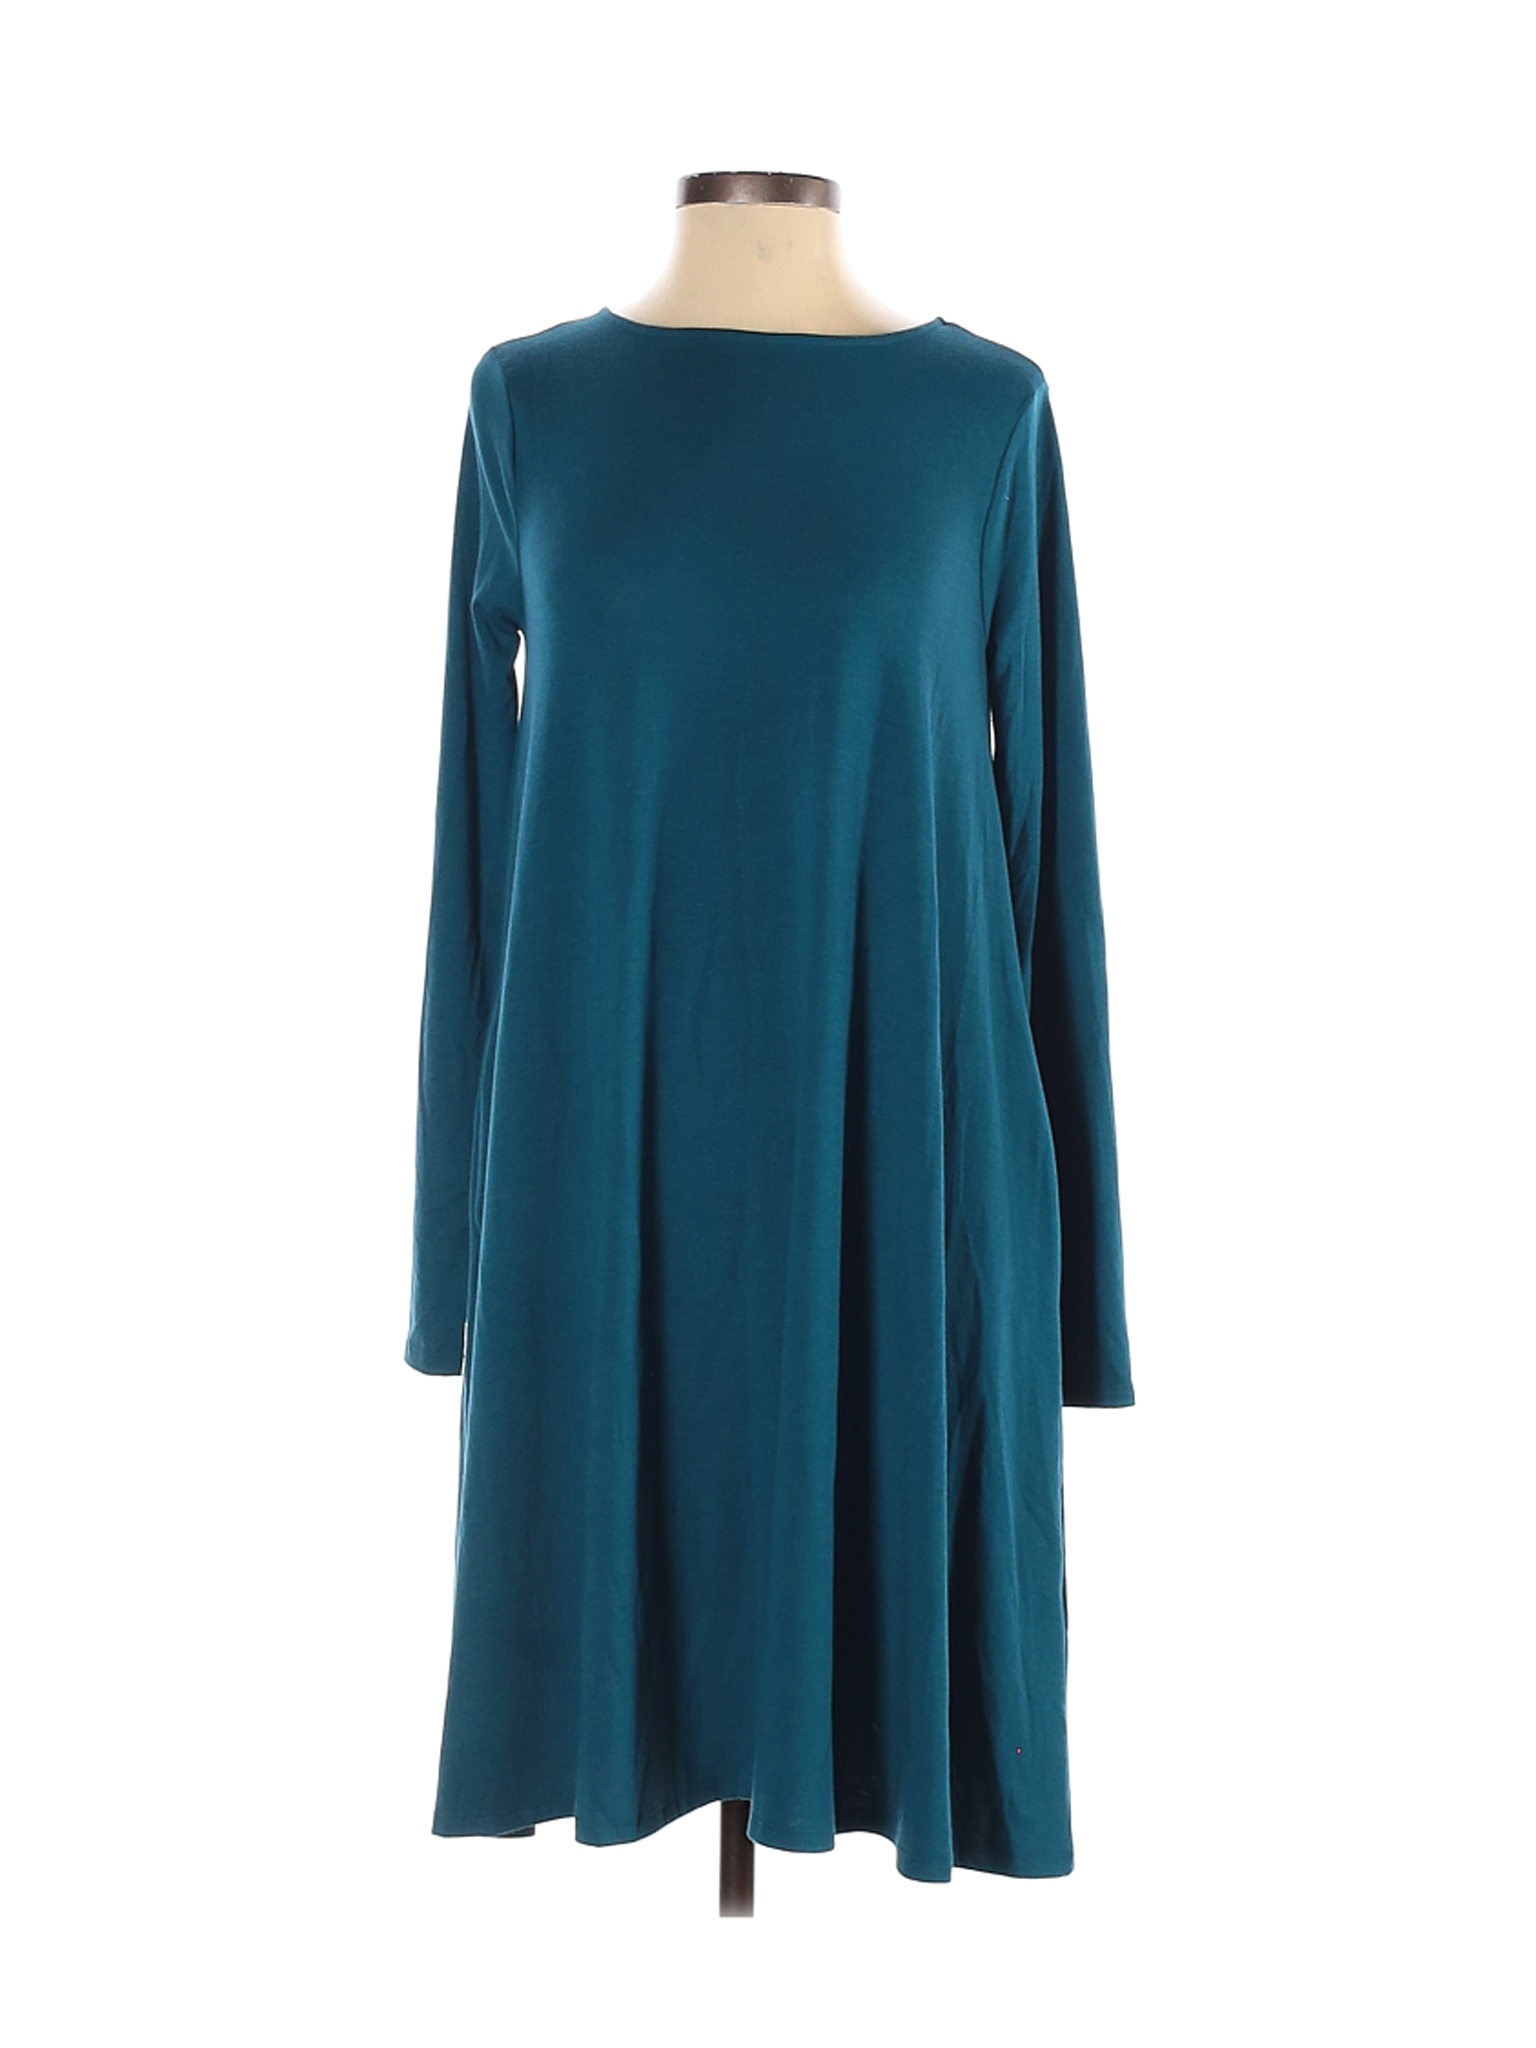 Zenana Premium Women Green Casual Dress S | eBay